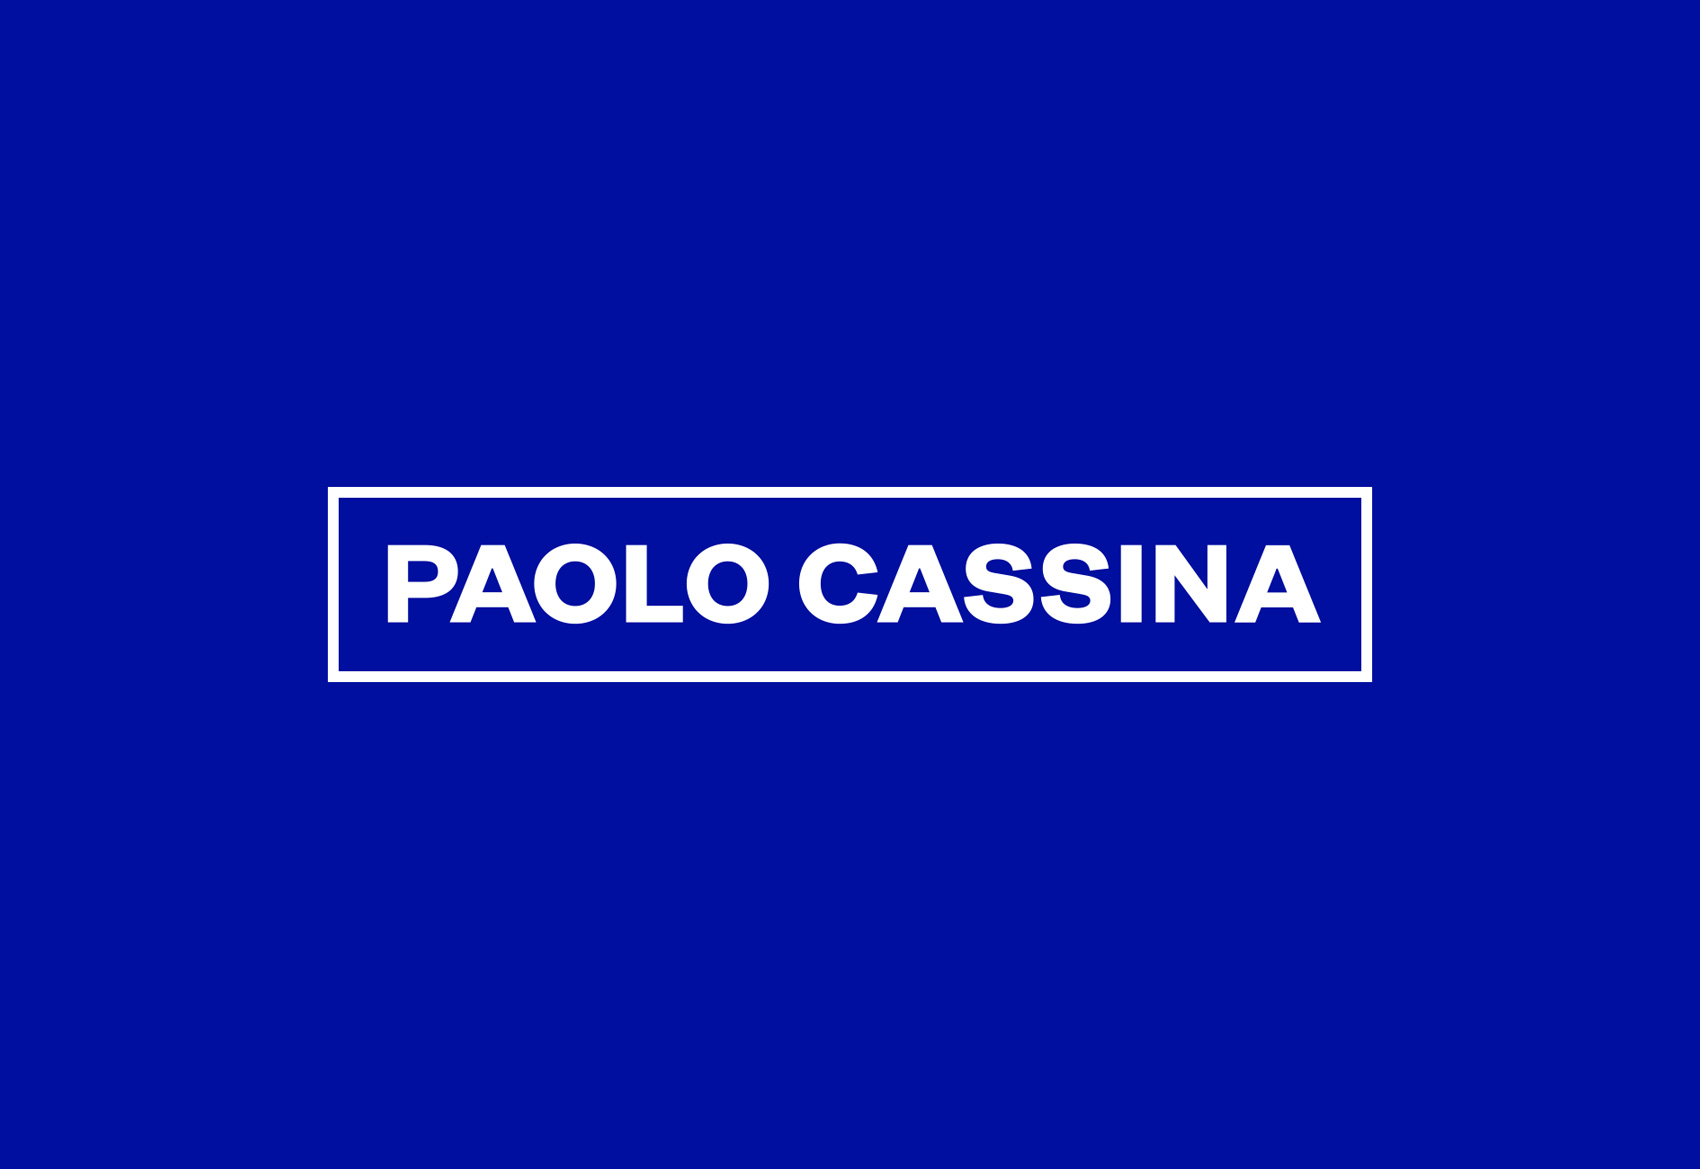 PAOLO CASSINA Branding by Mark Zeff Design